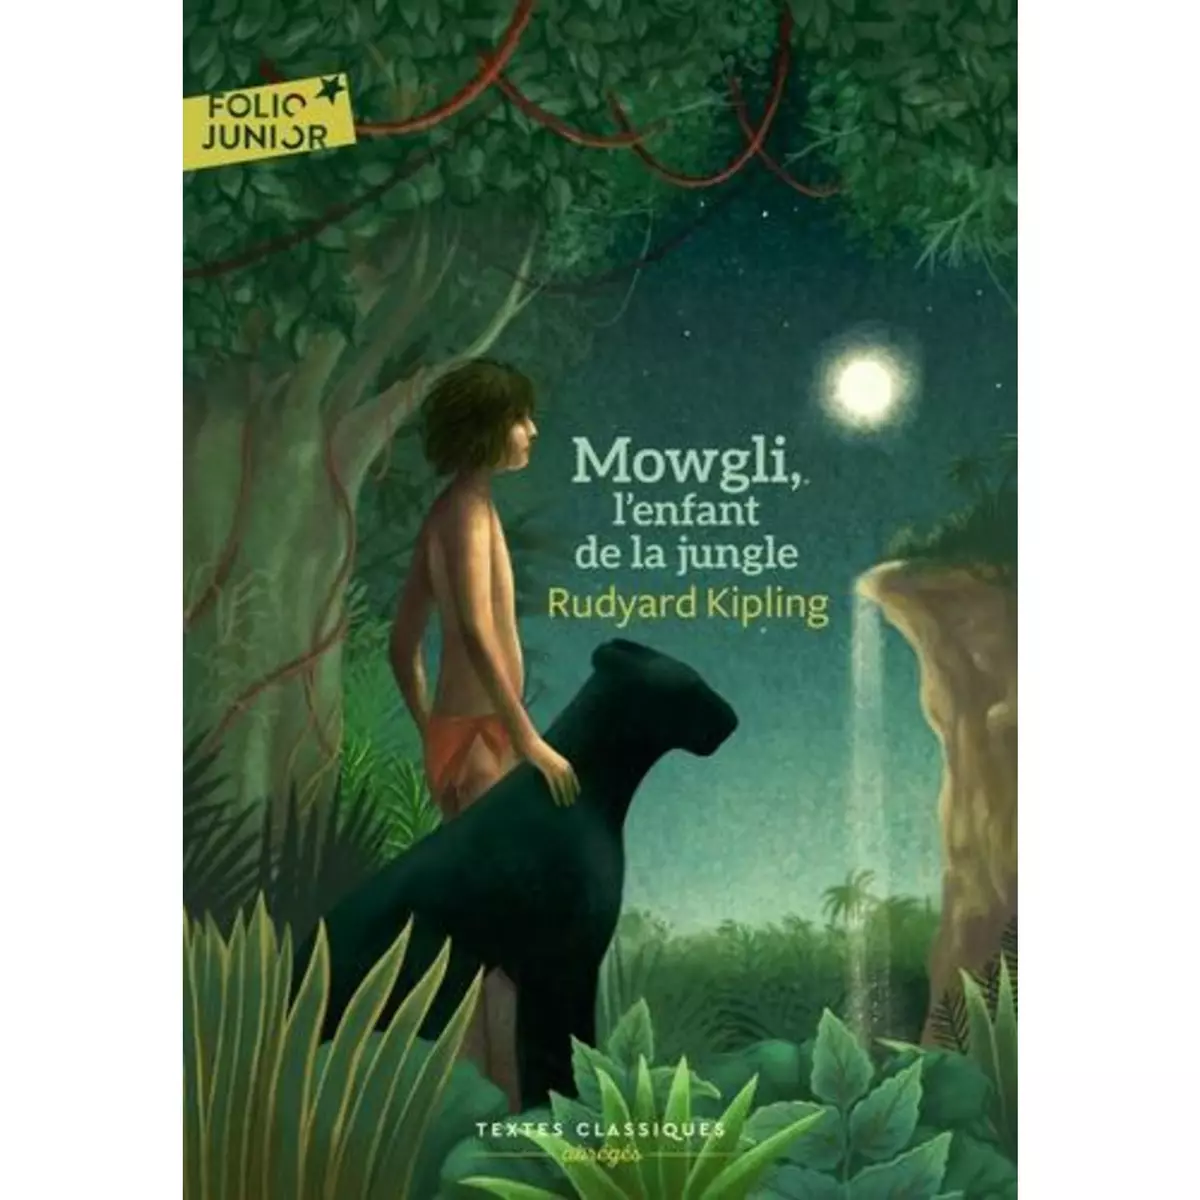  MOWGLI, L'ENFANT DE LA JUNGLE, Rudyard Kipling